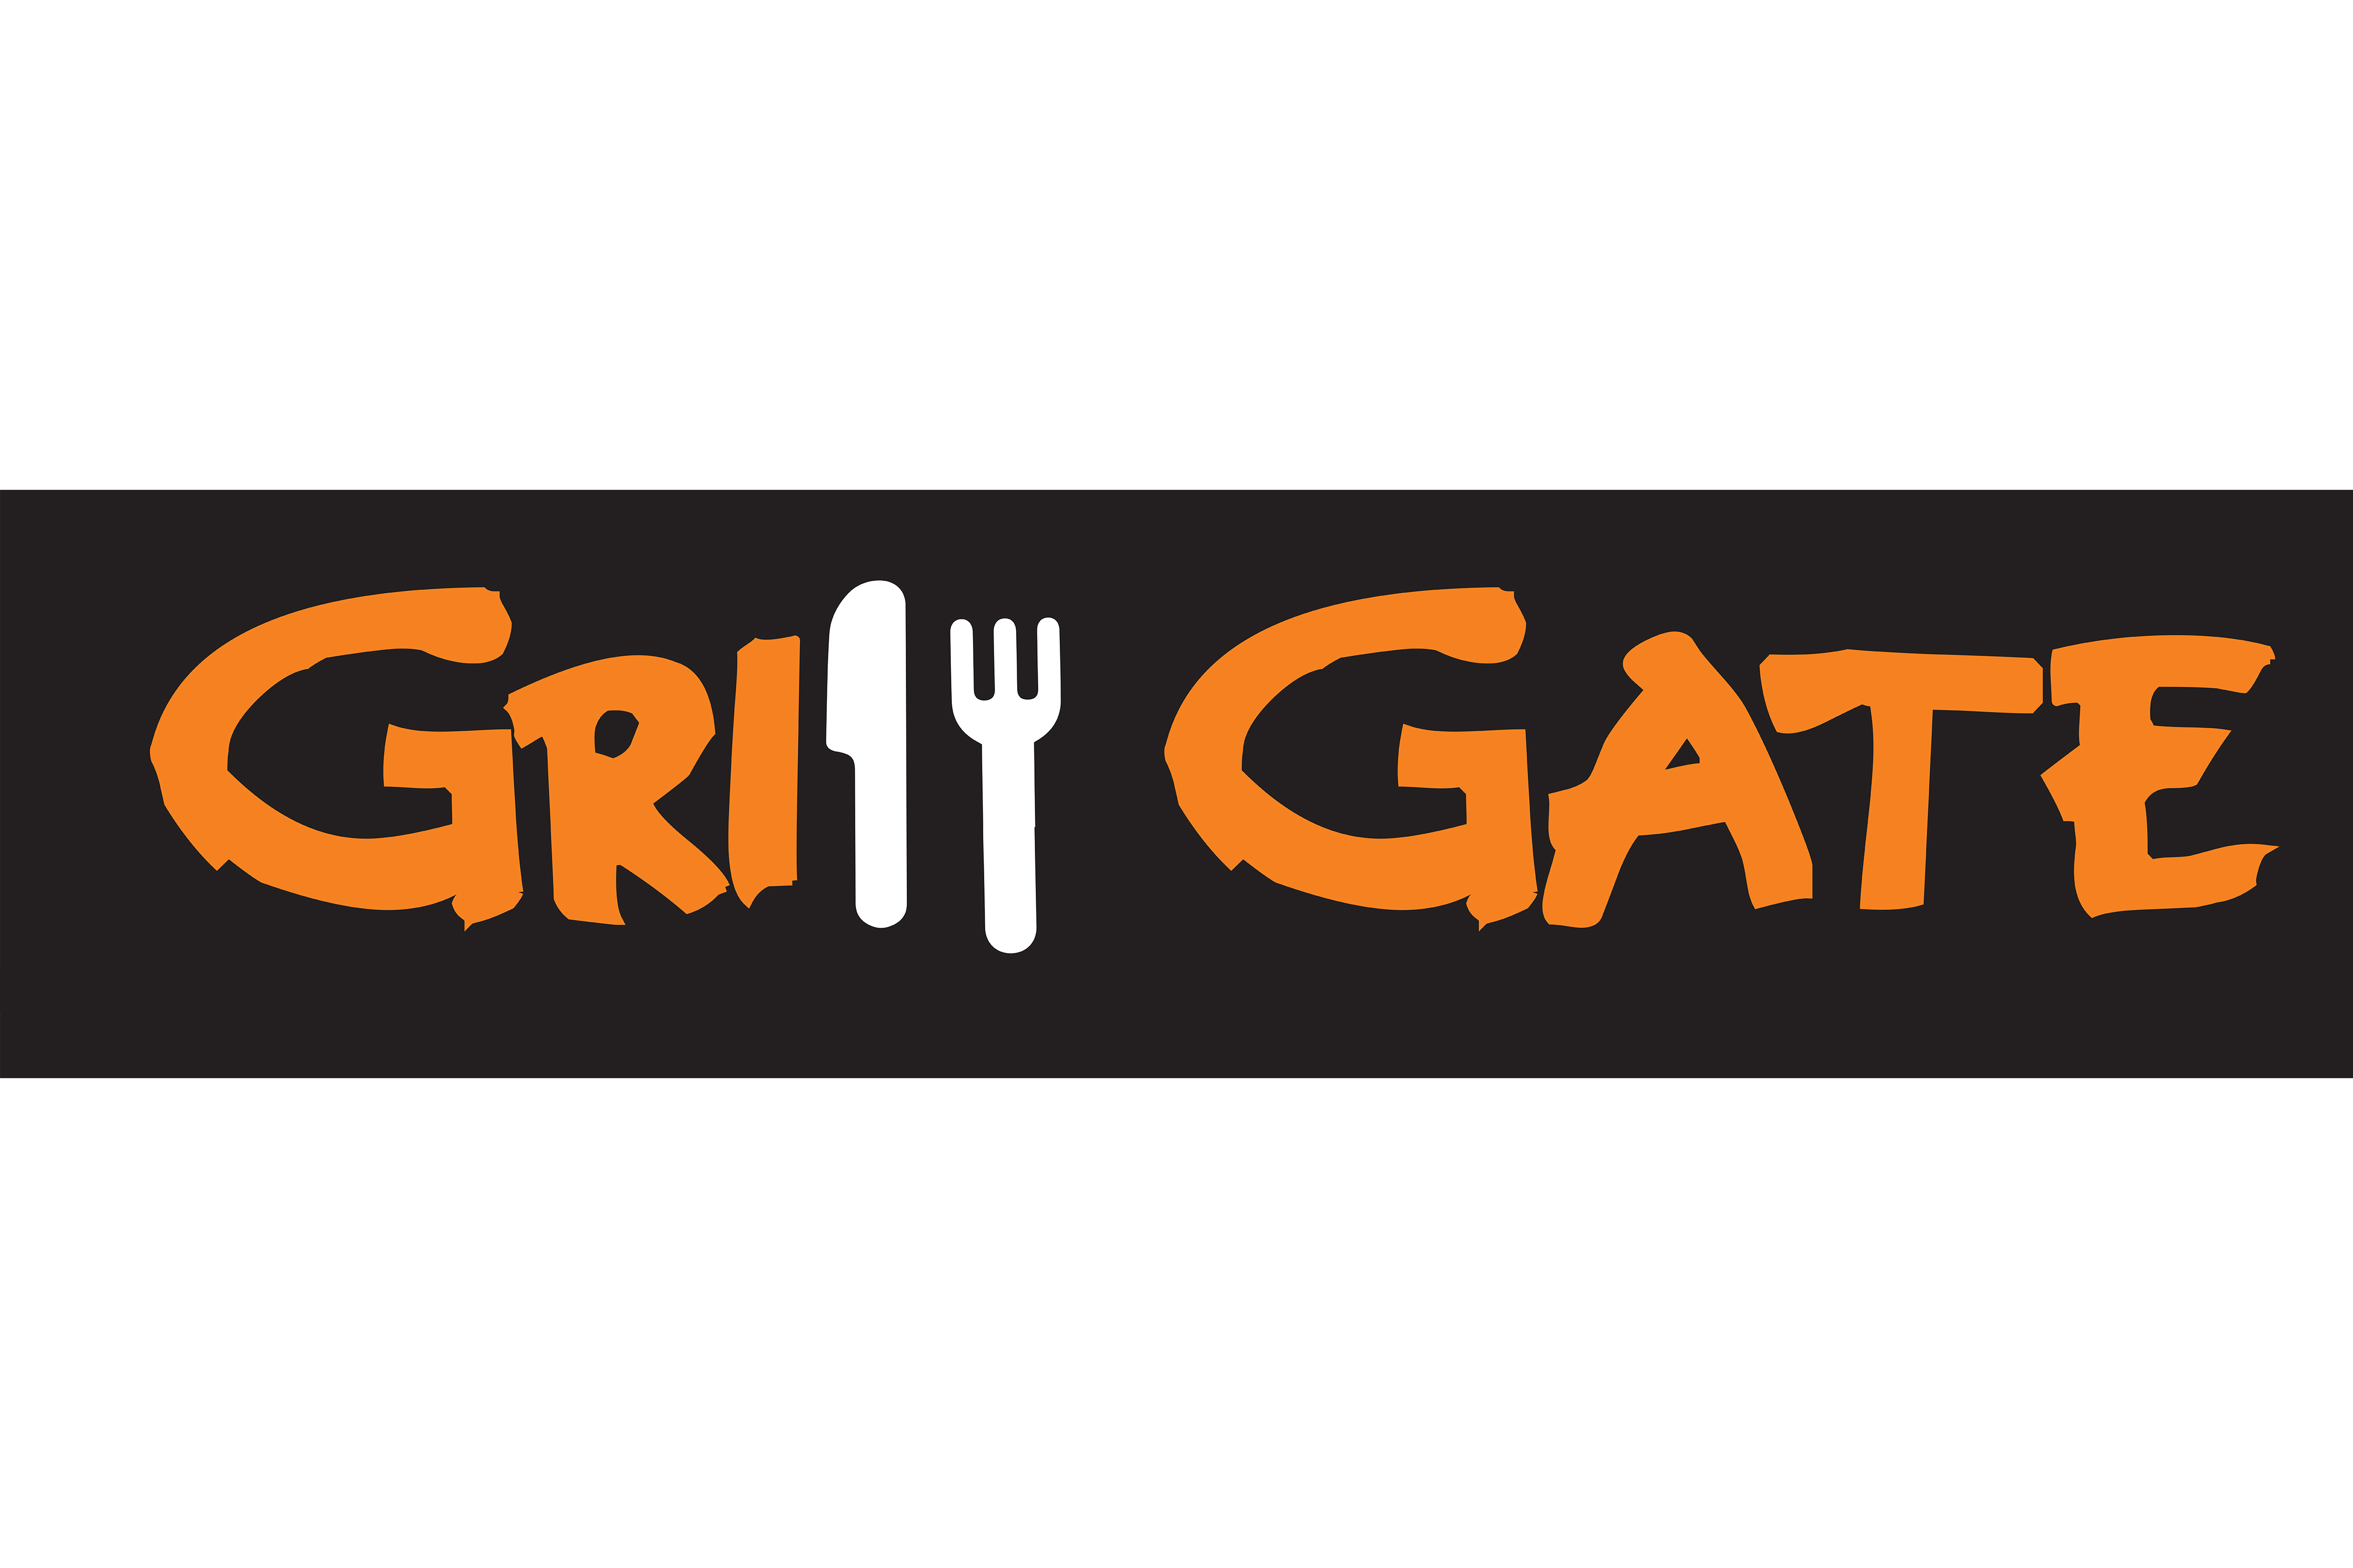 Grill Gate